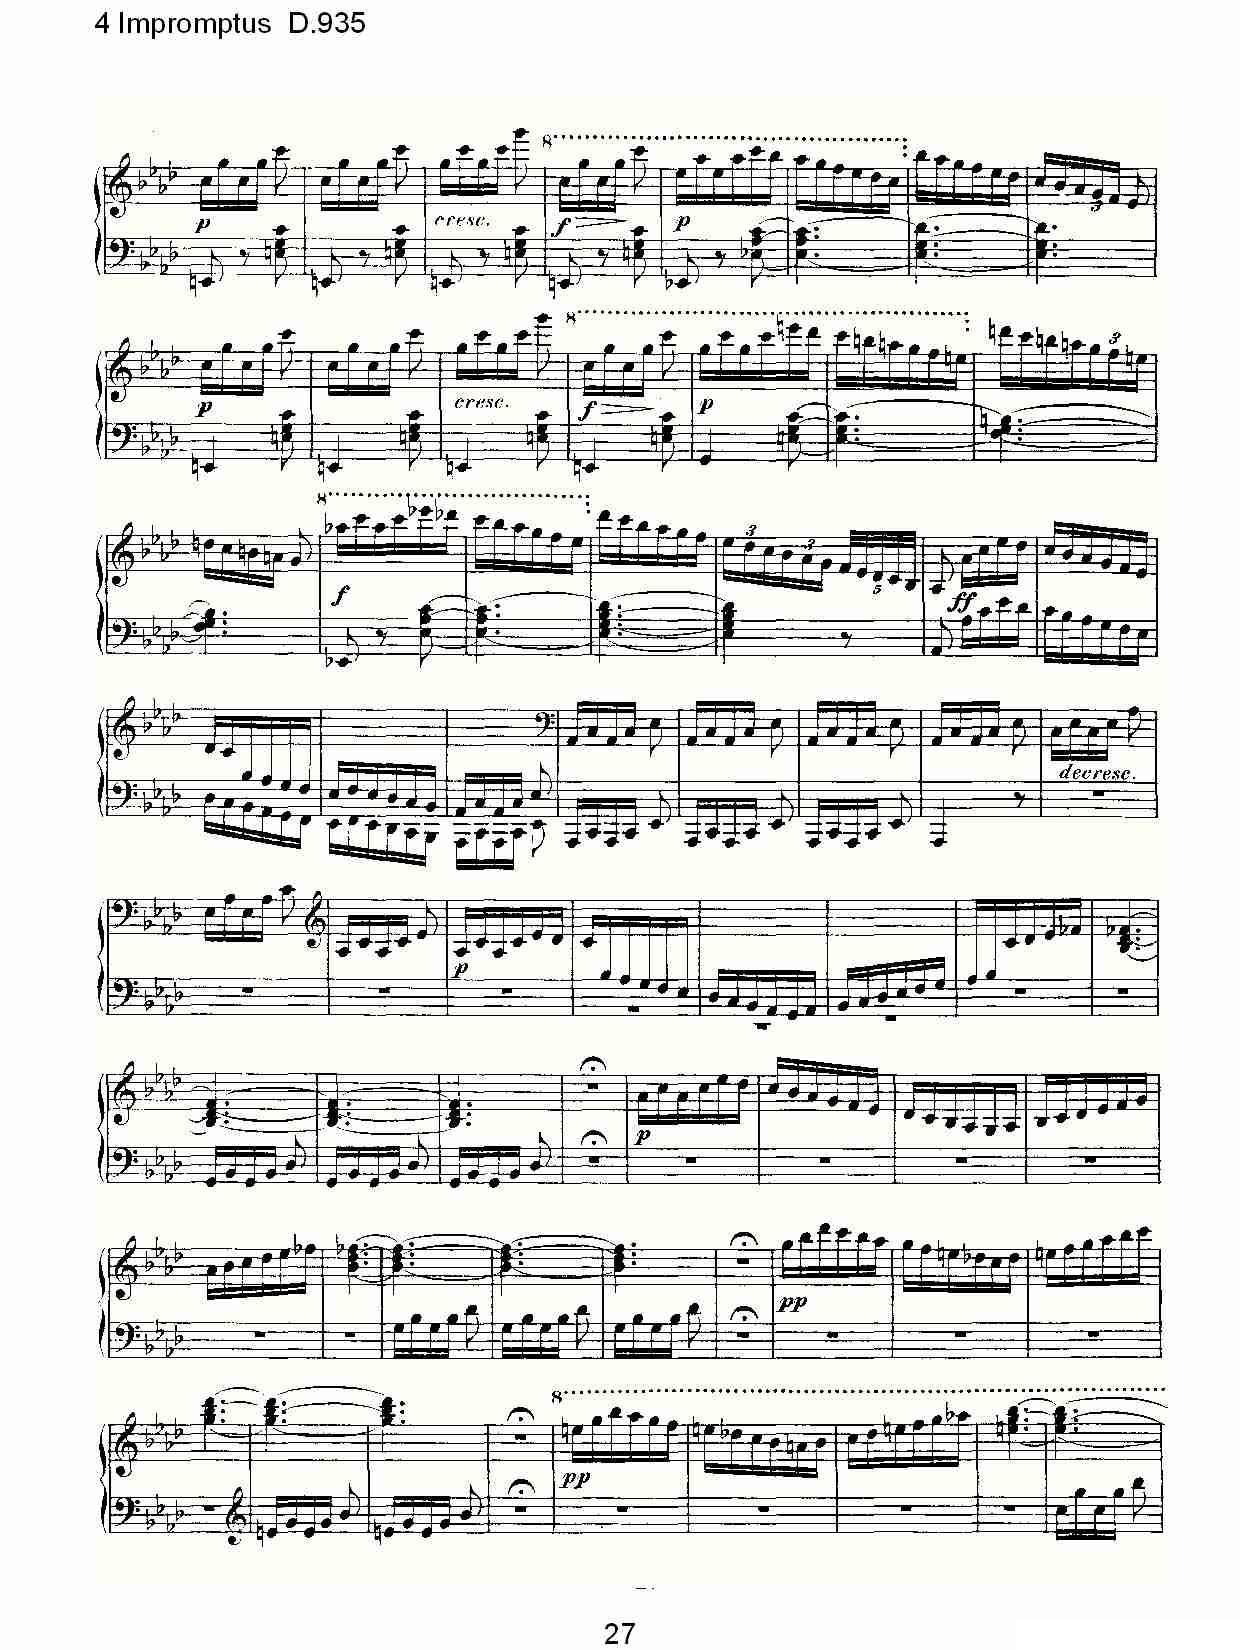 4 Impromptus D.935（4人即兴演奏D.935）钢琴曲谱（图27）